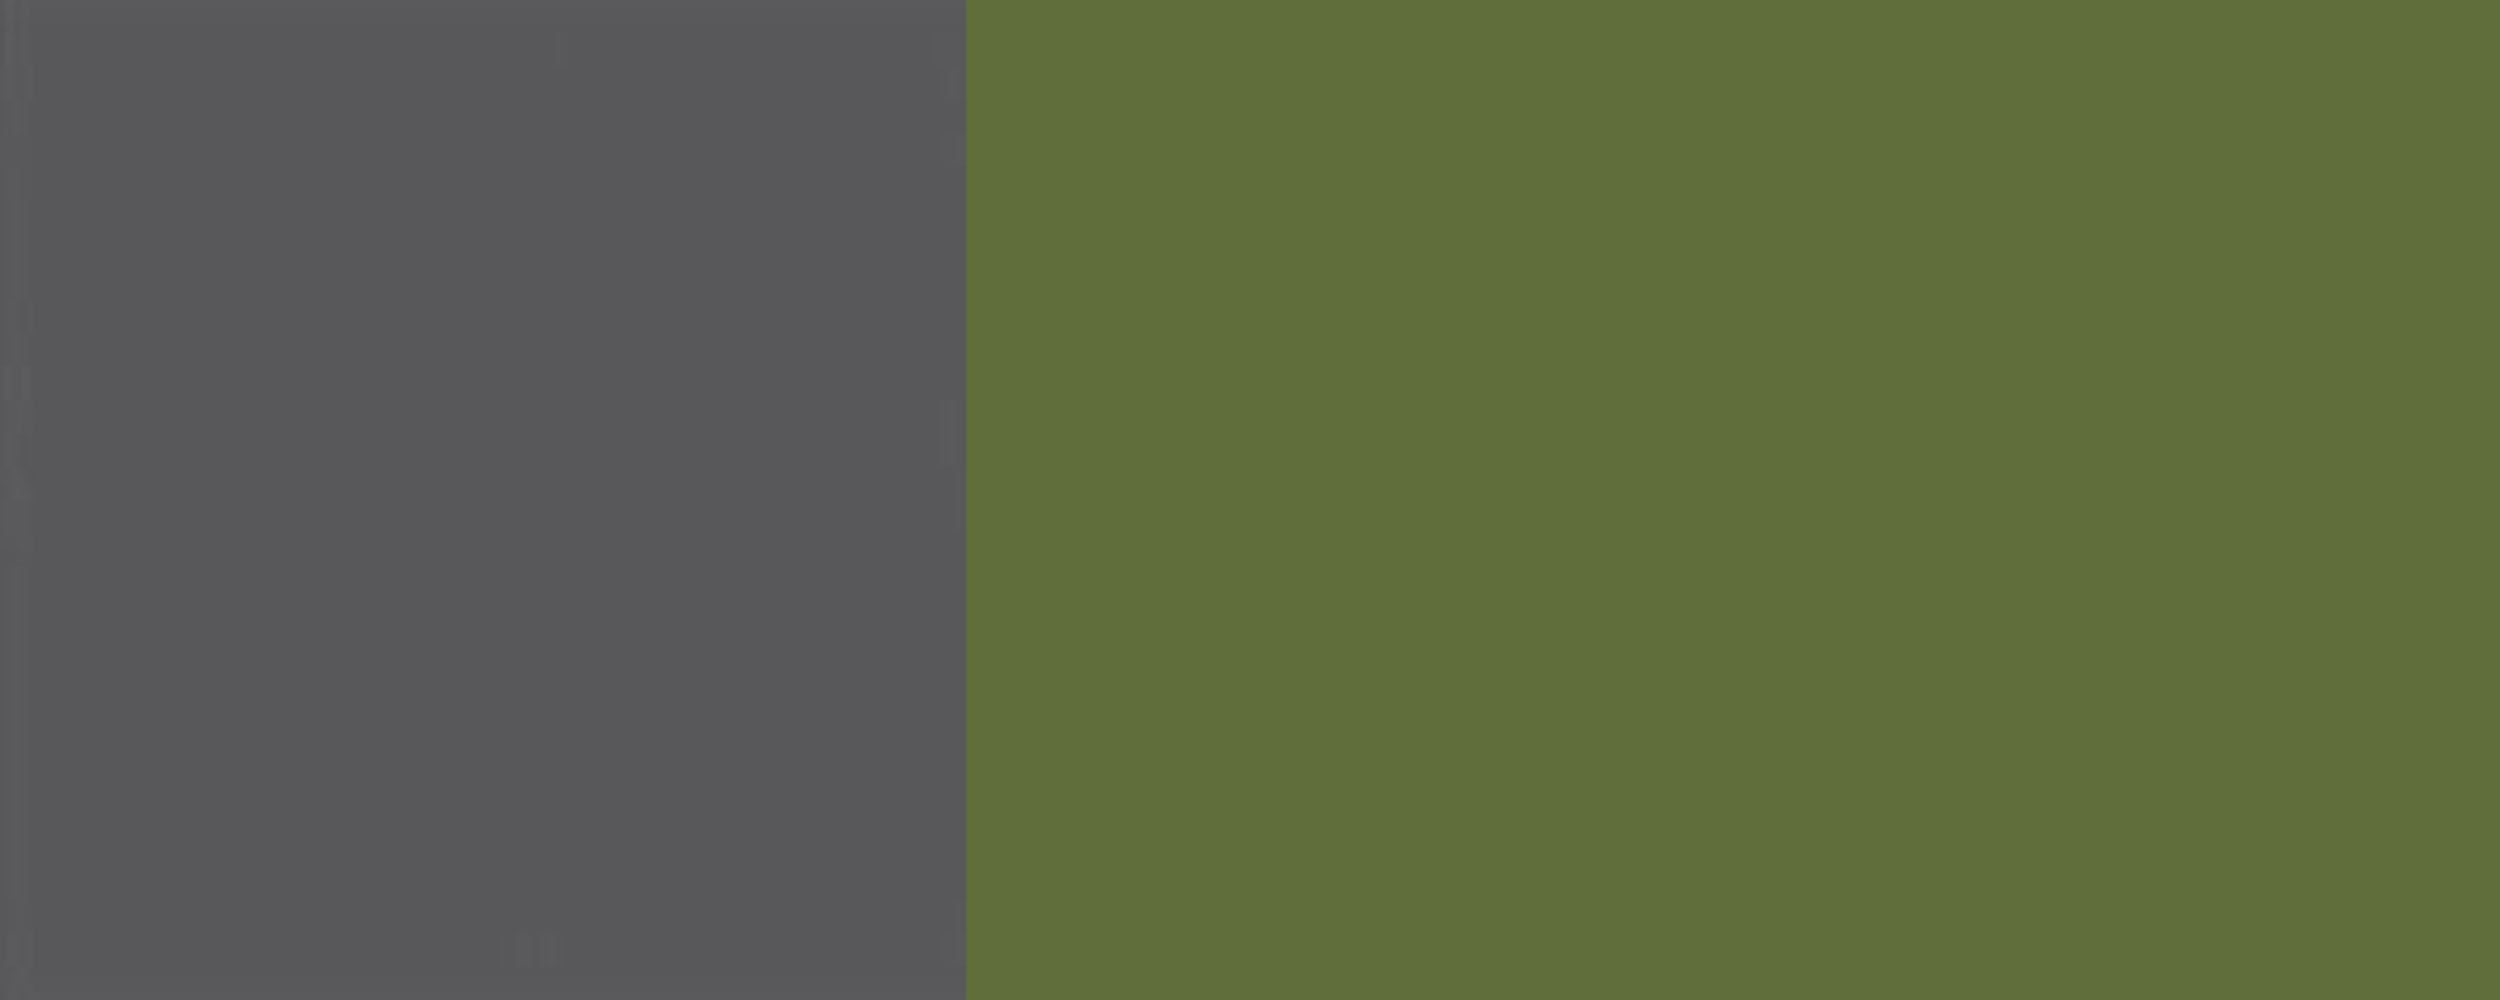 Front- farngrün 60cm Korpusfarbe 2-türig matt Unterschrank Rimini und Feldmann-Wohnen RAL (Rimini) wählbar 6025